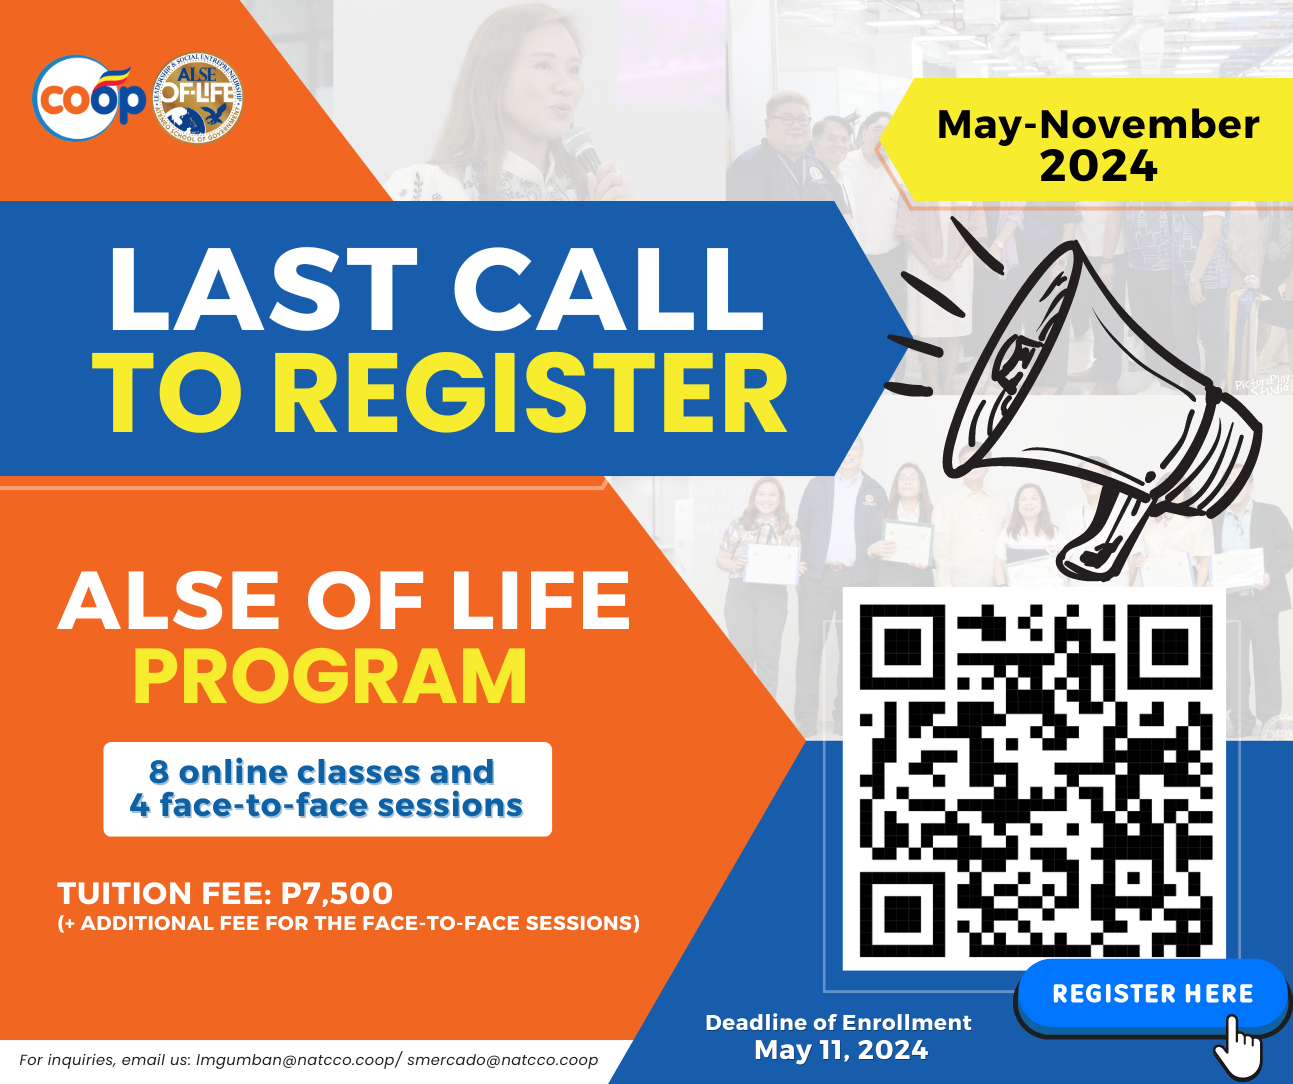 ALSE OF LIFE Program Registration is Now Open!